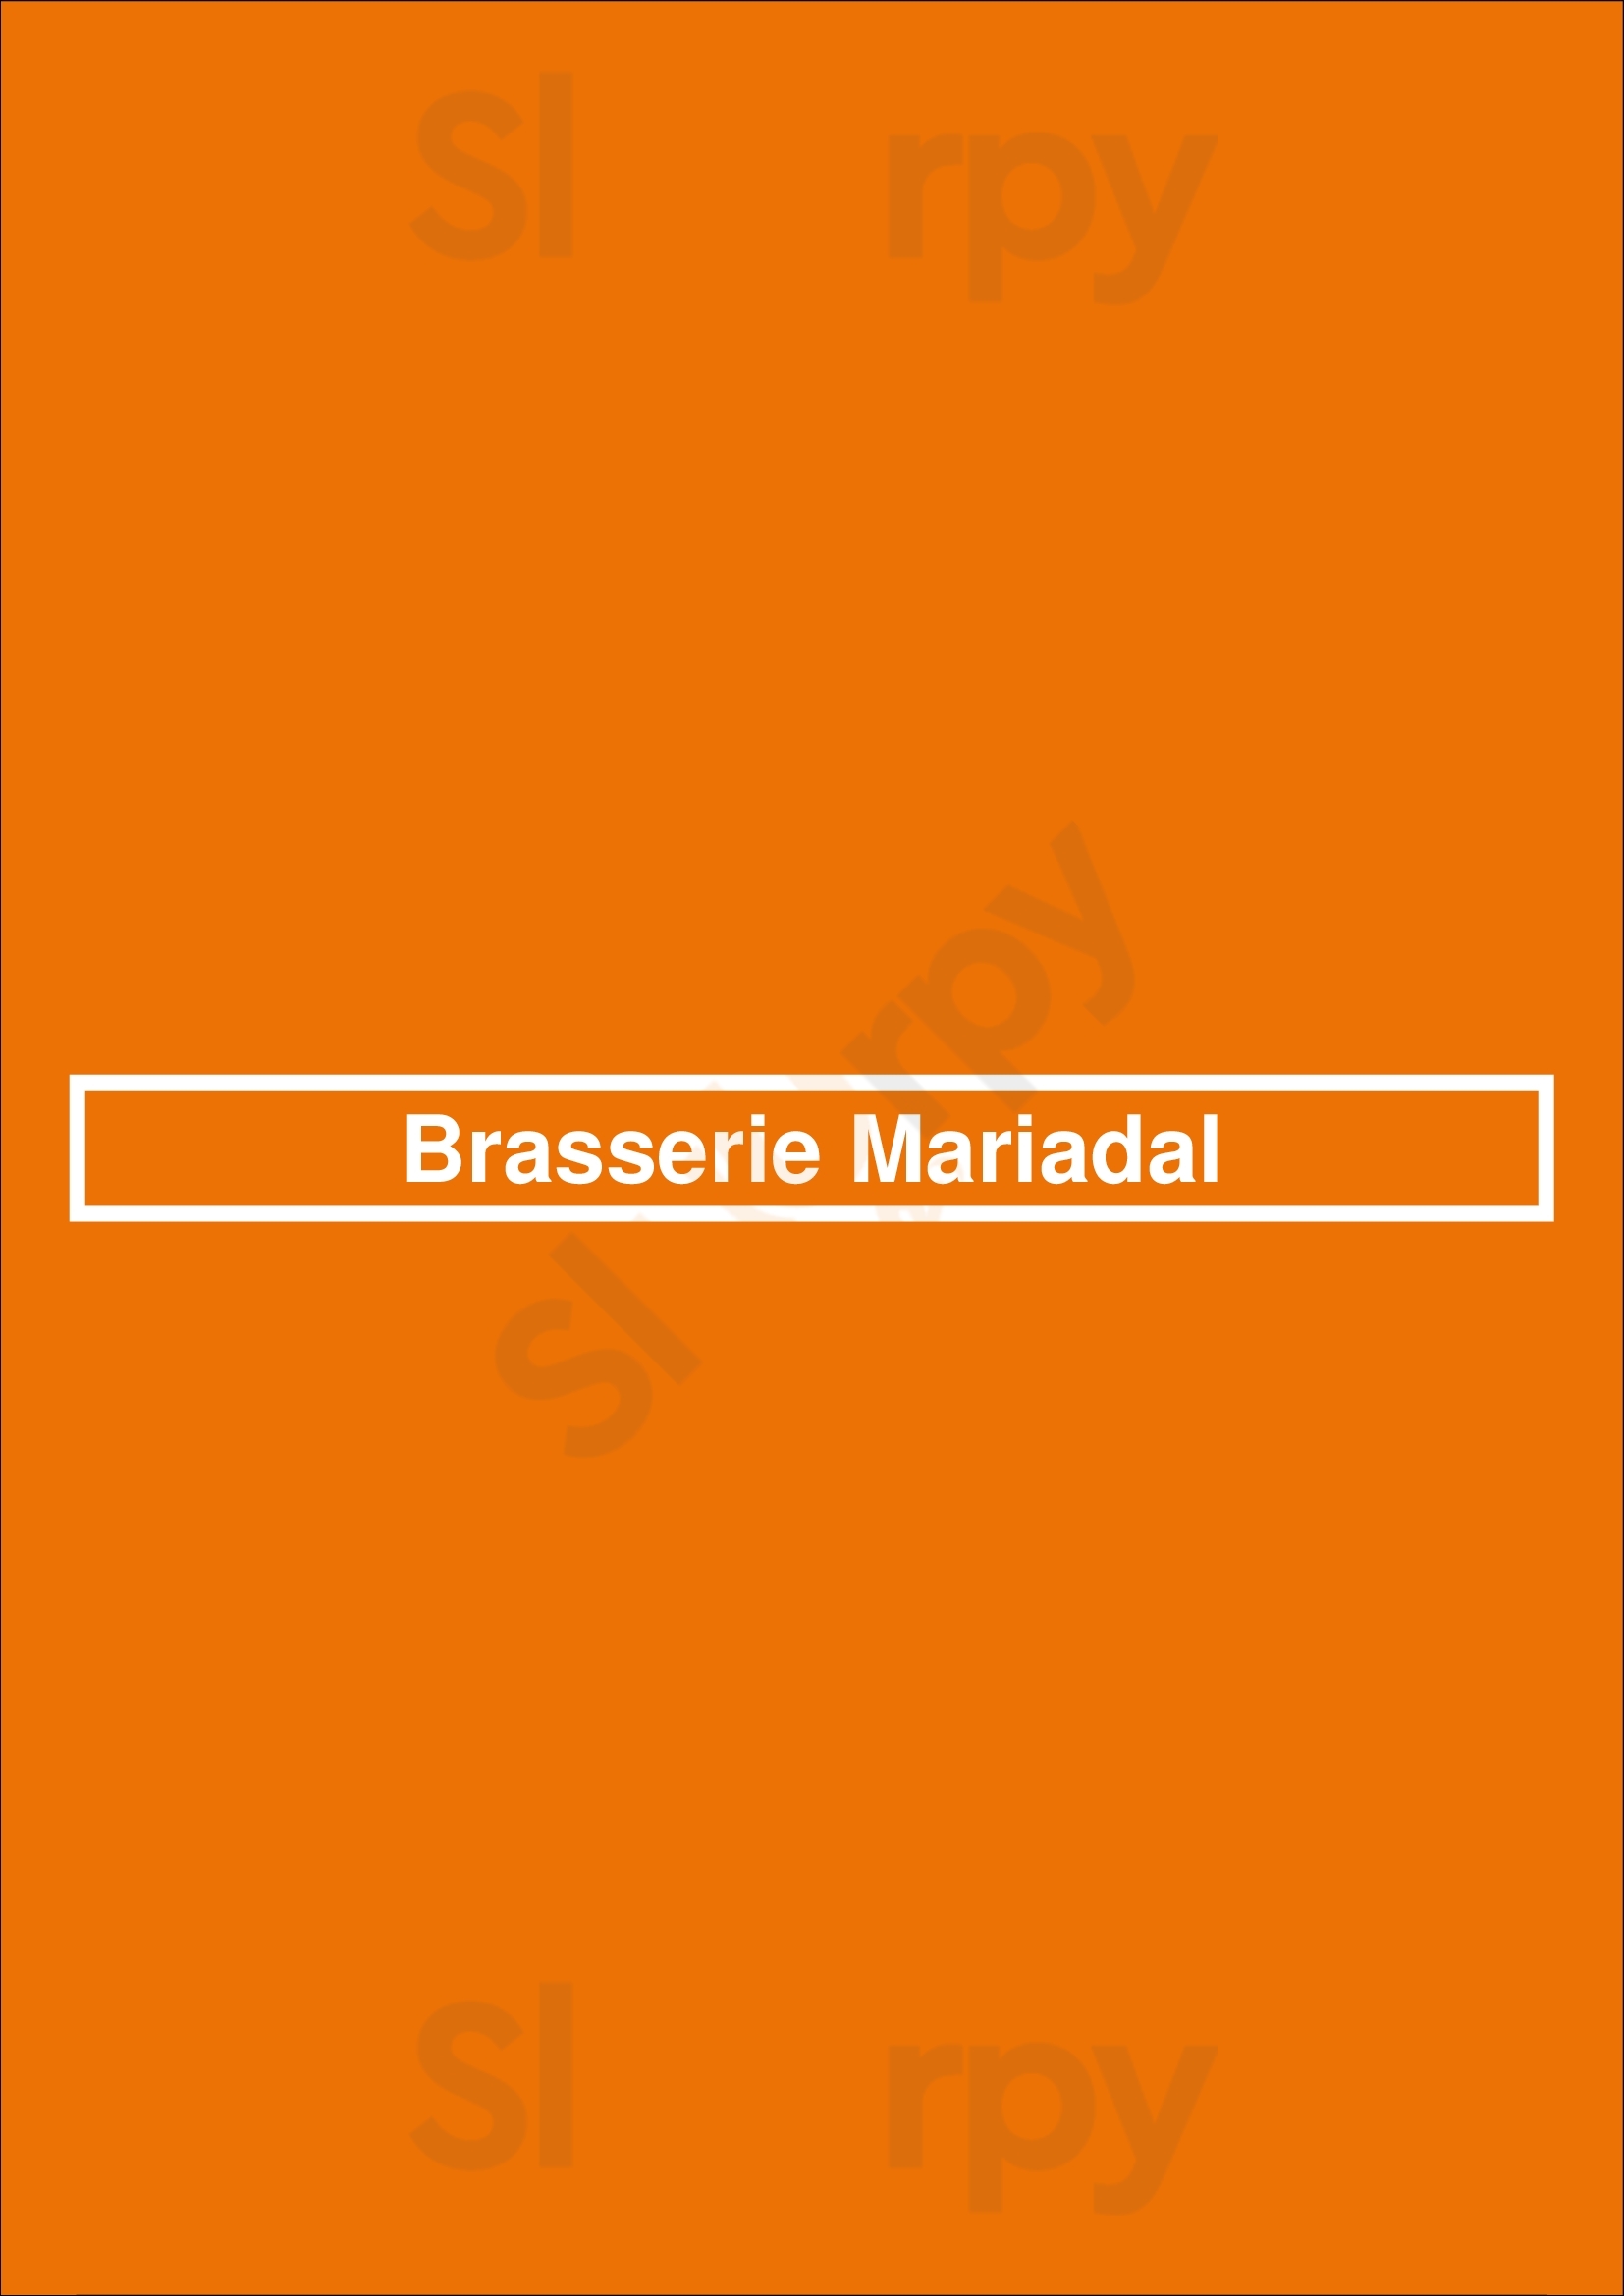 Brasserie Mariadal Zaventem Menu - 1